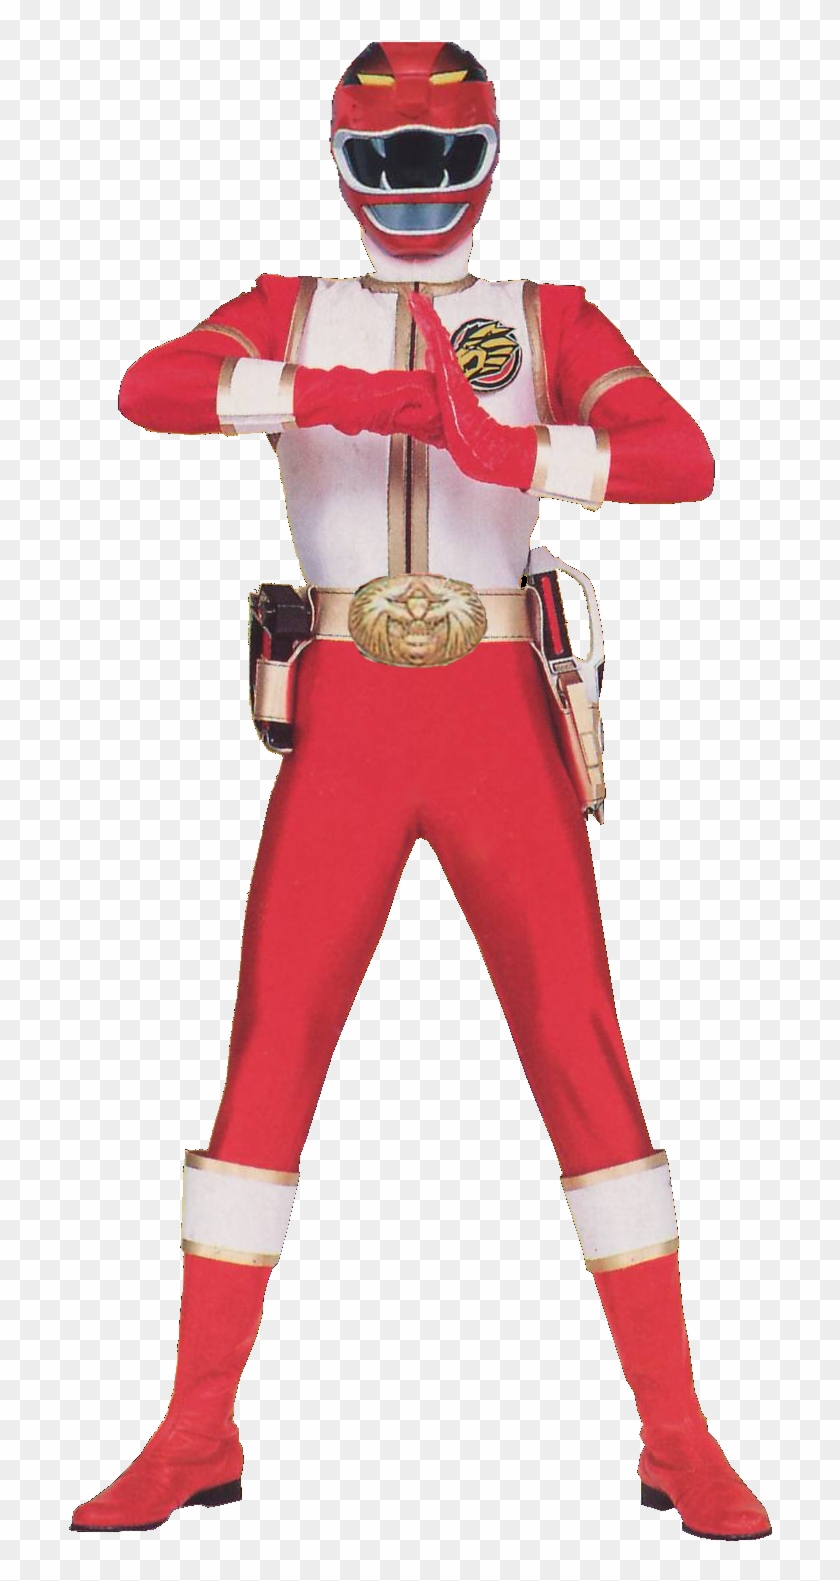 Red Wild Force Z Ranger - Red Power Ranger Png Clipart